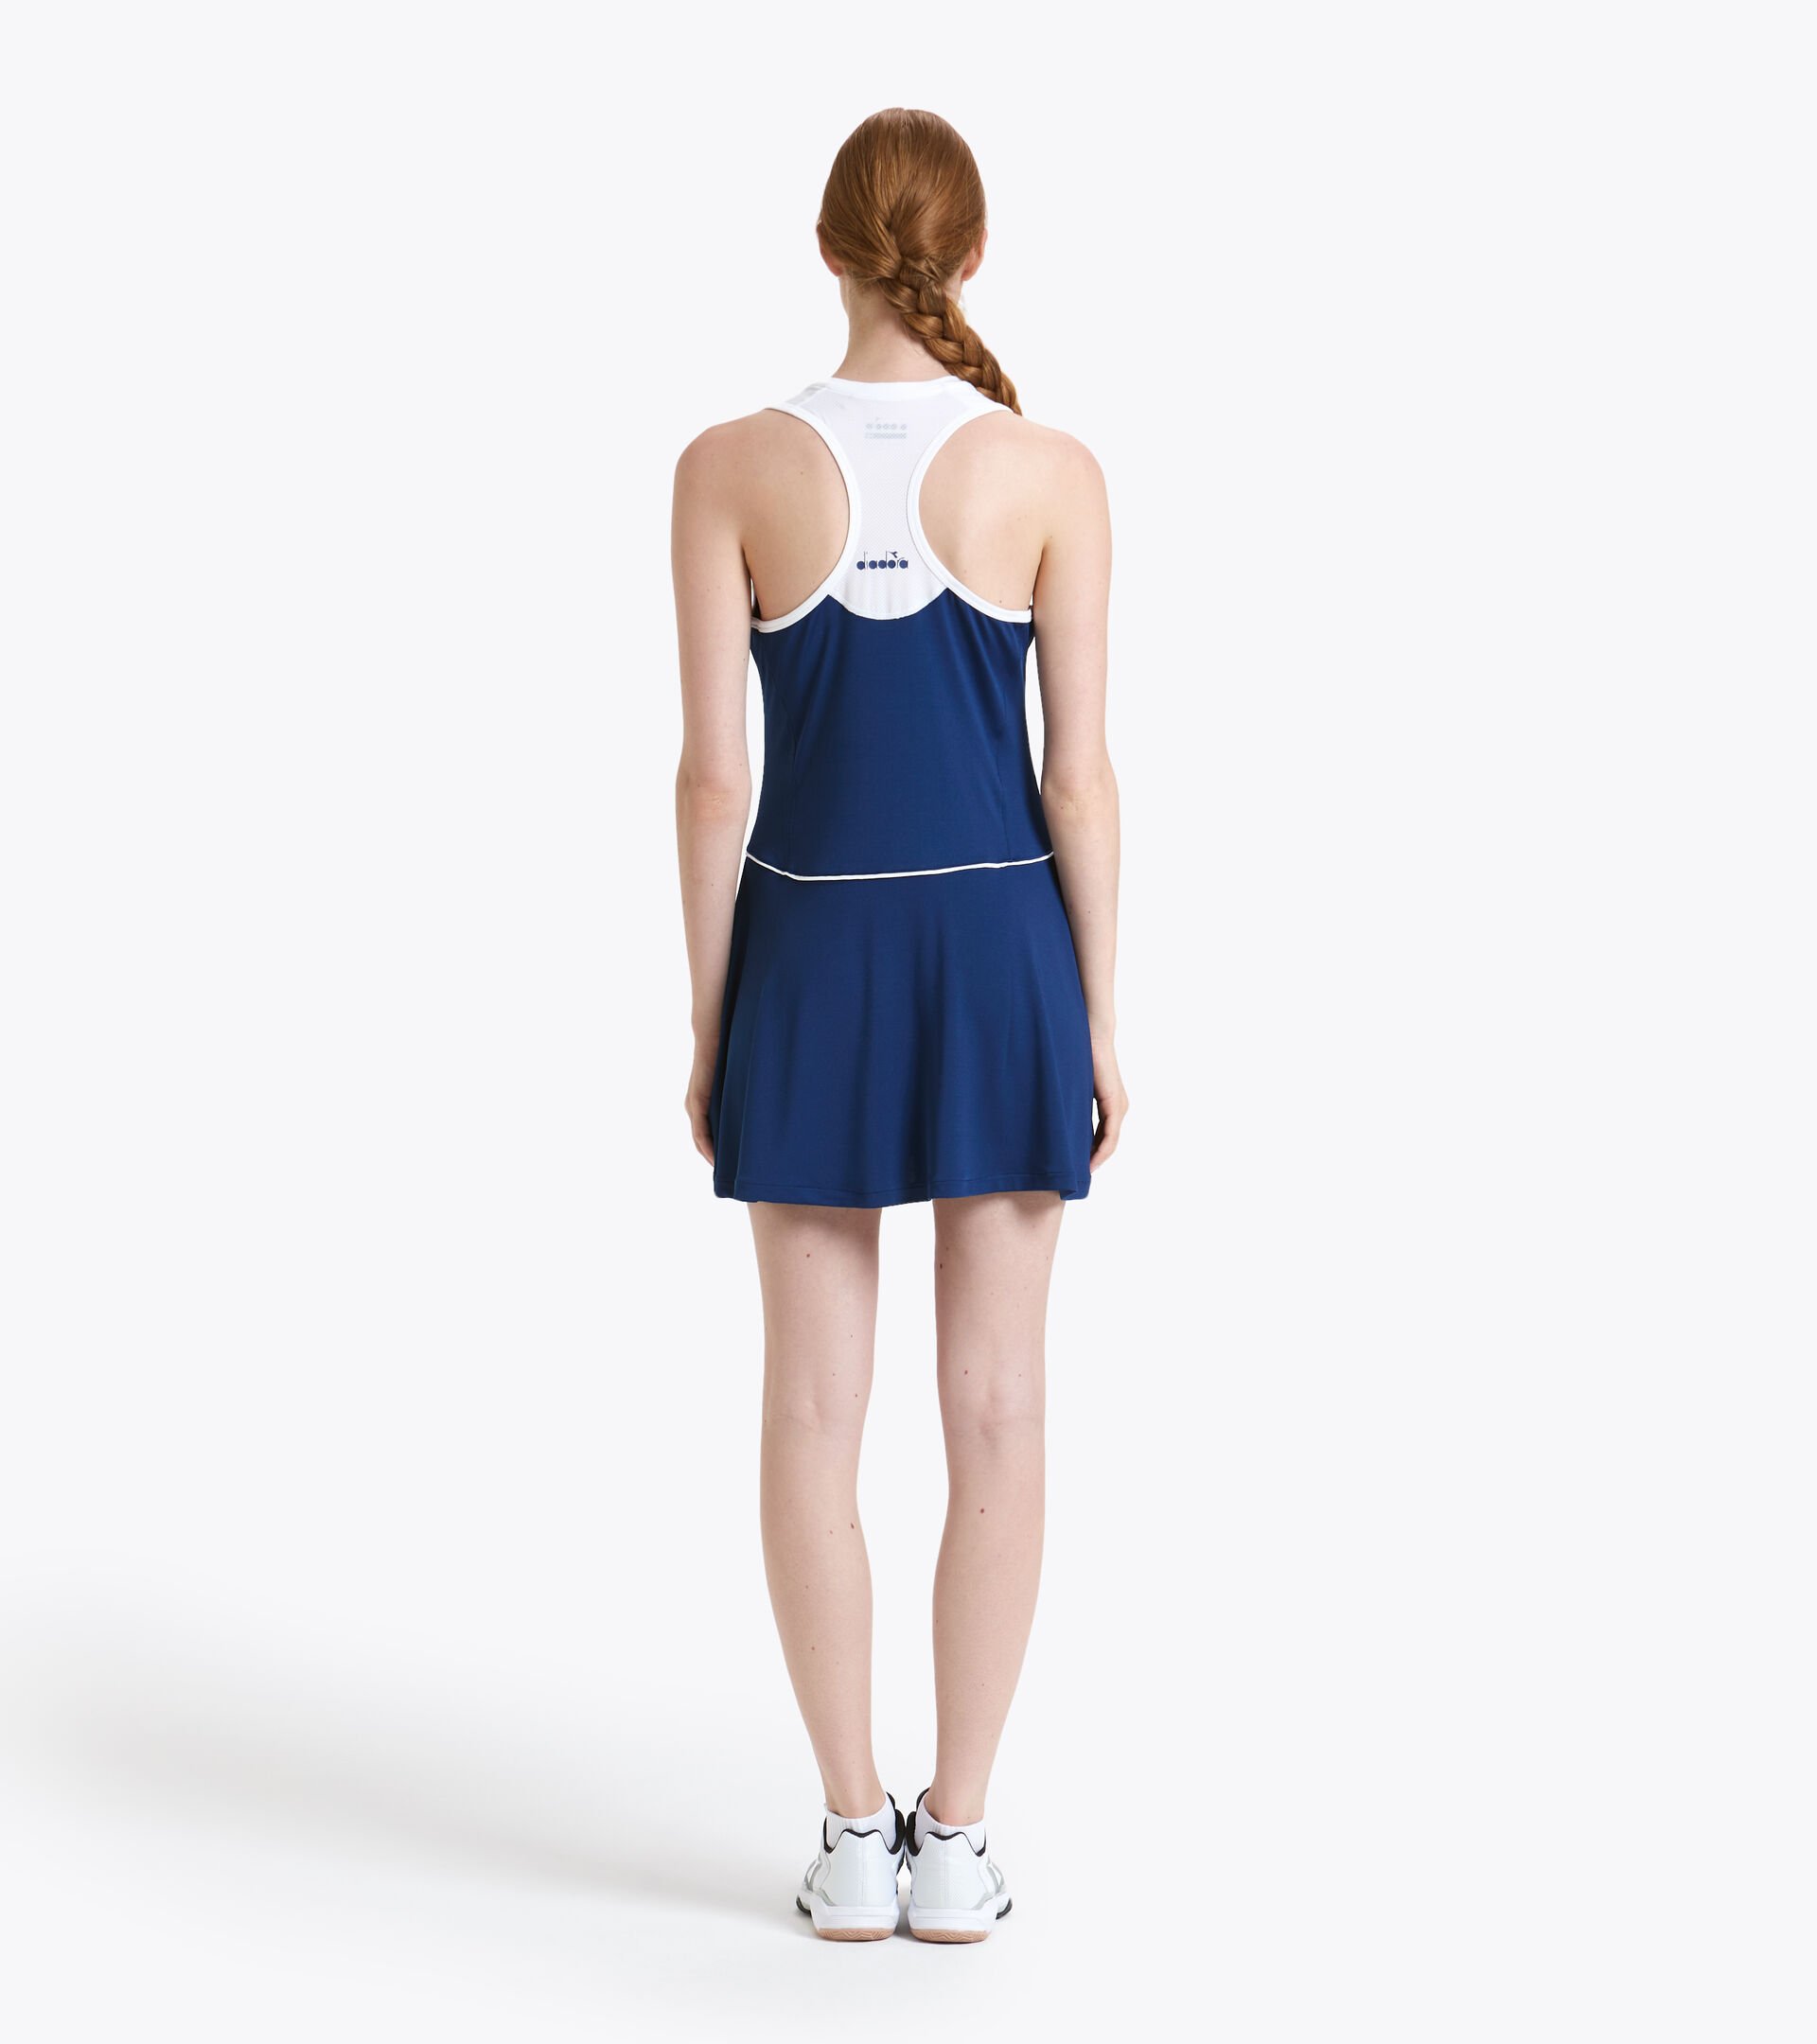 Damen-Tennis-Outfit L. DRESS COURT GUTBLAU - Diadora